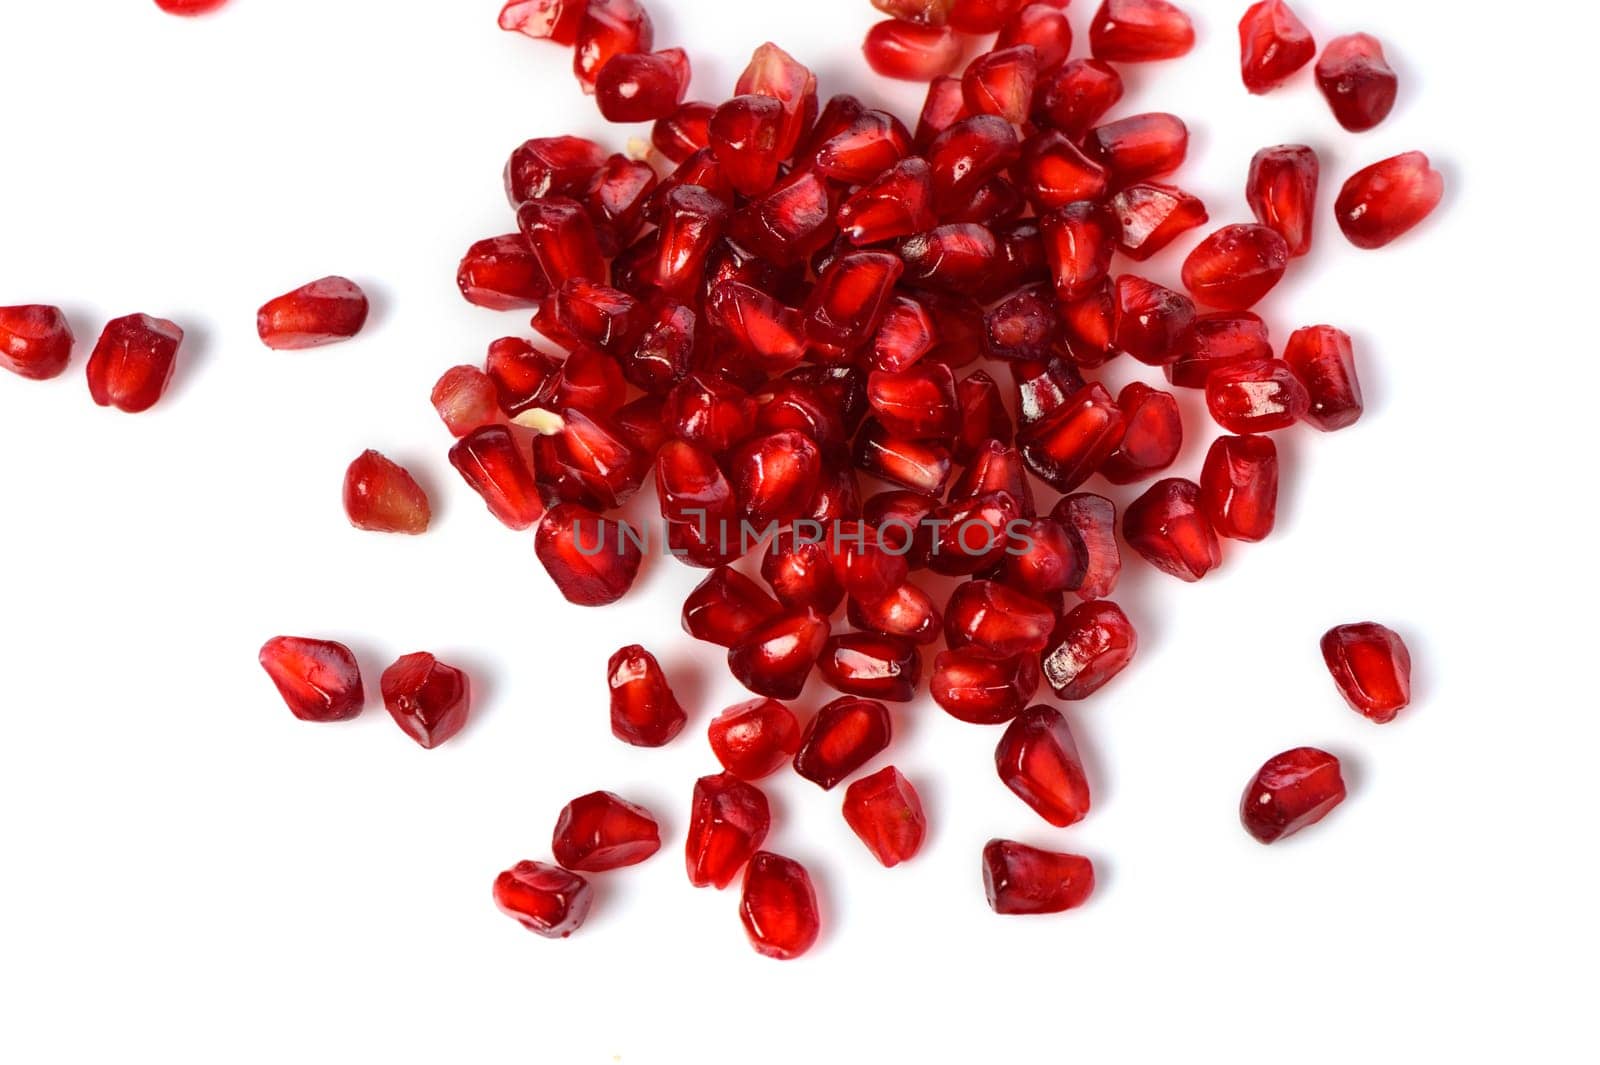 juicy pomegranate seeds on white background 6